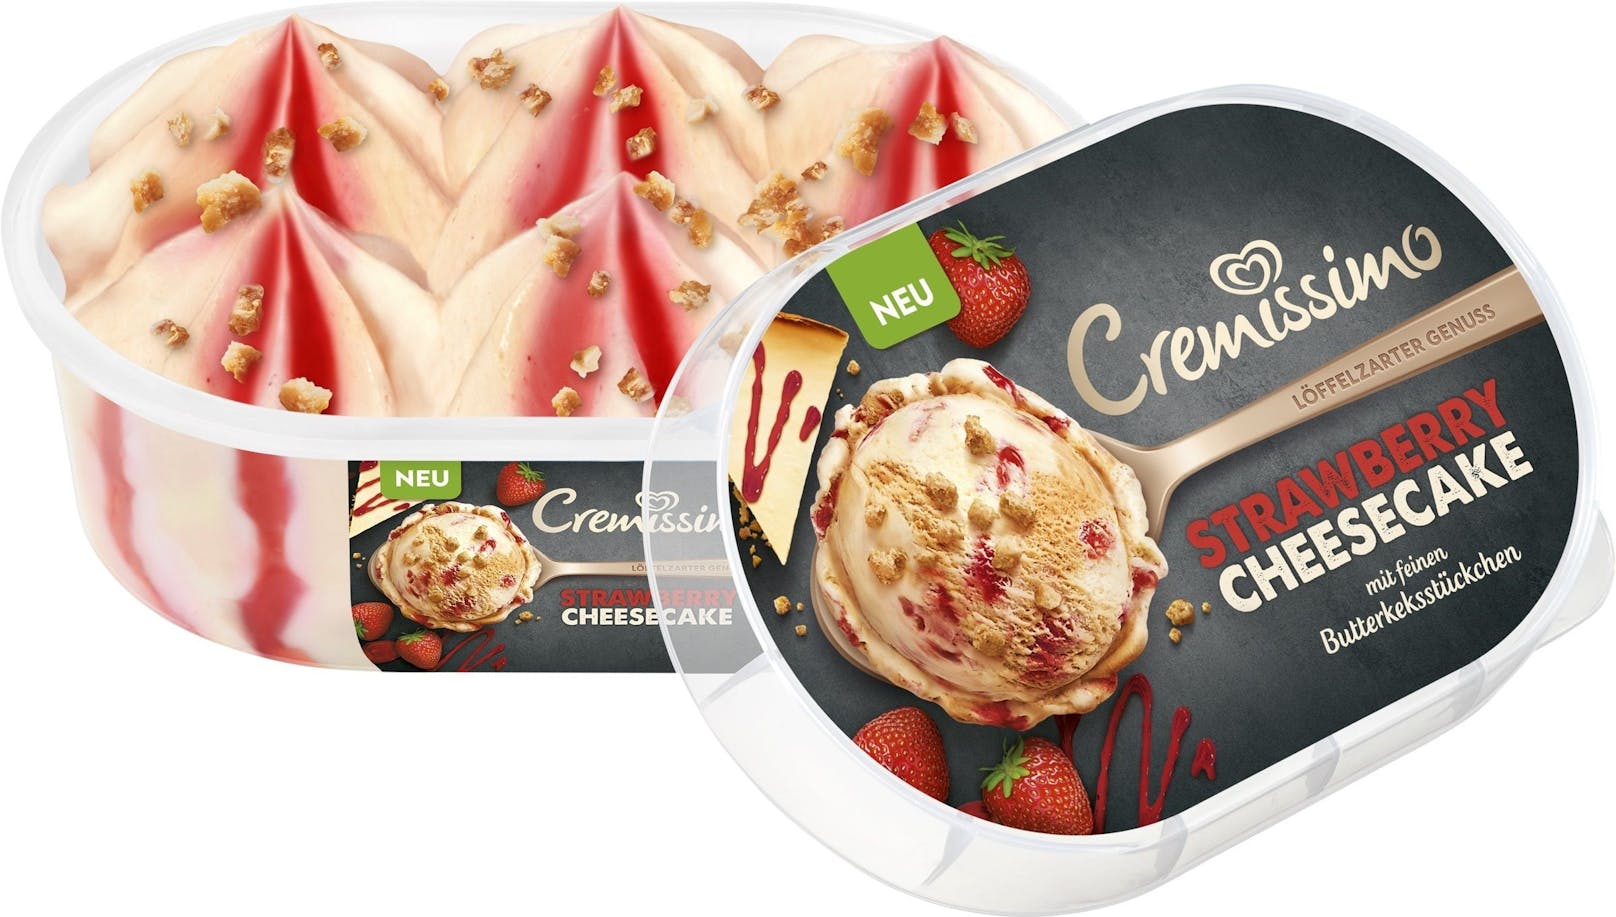 Neue Eis-Kreation Cremissimo Strawberry Cheesecake